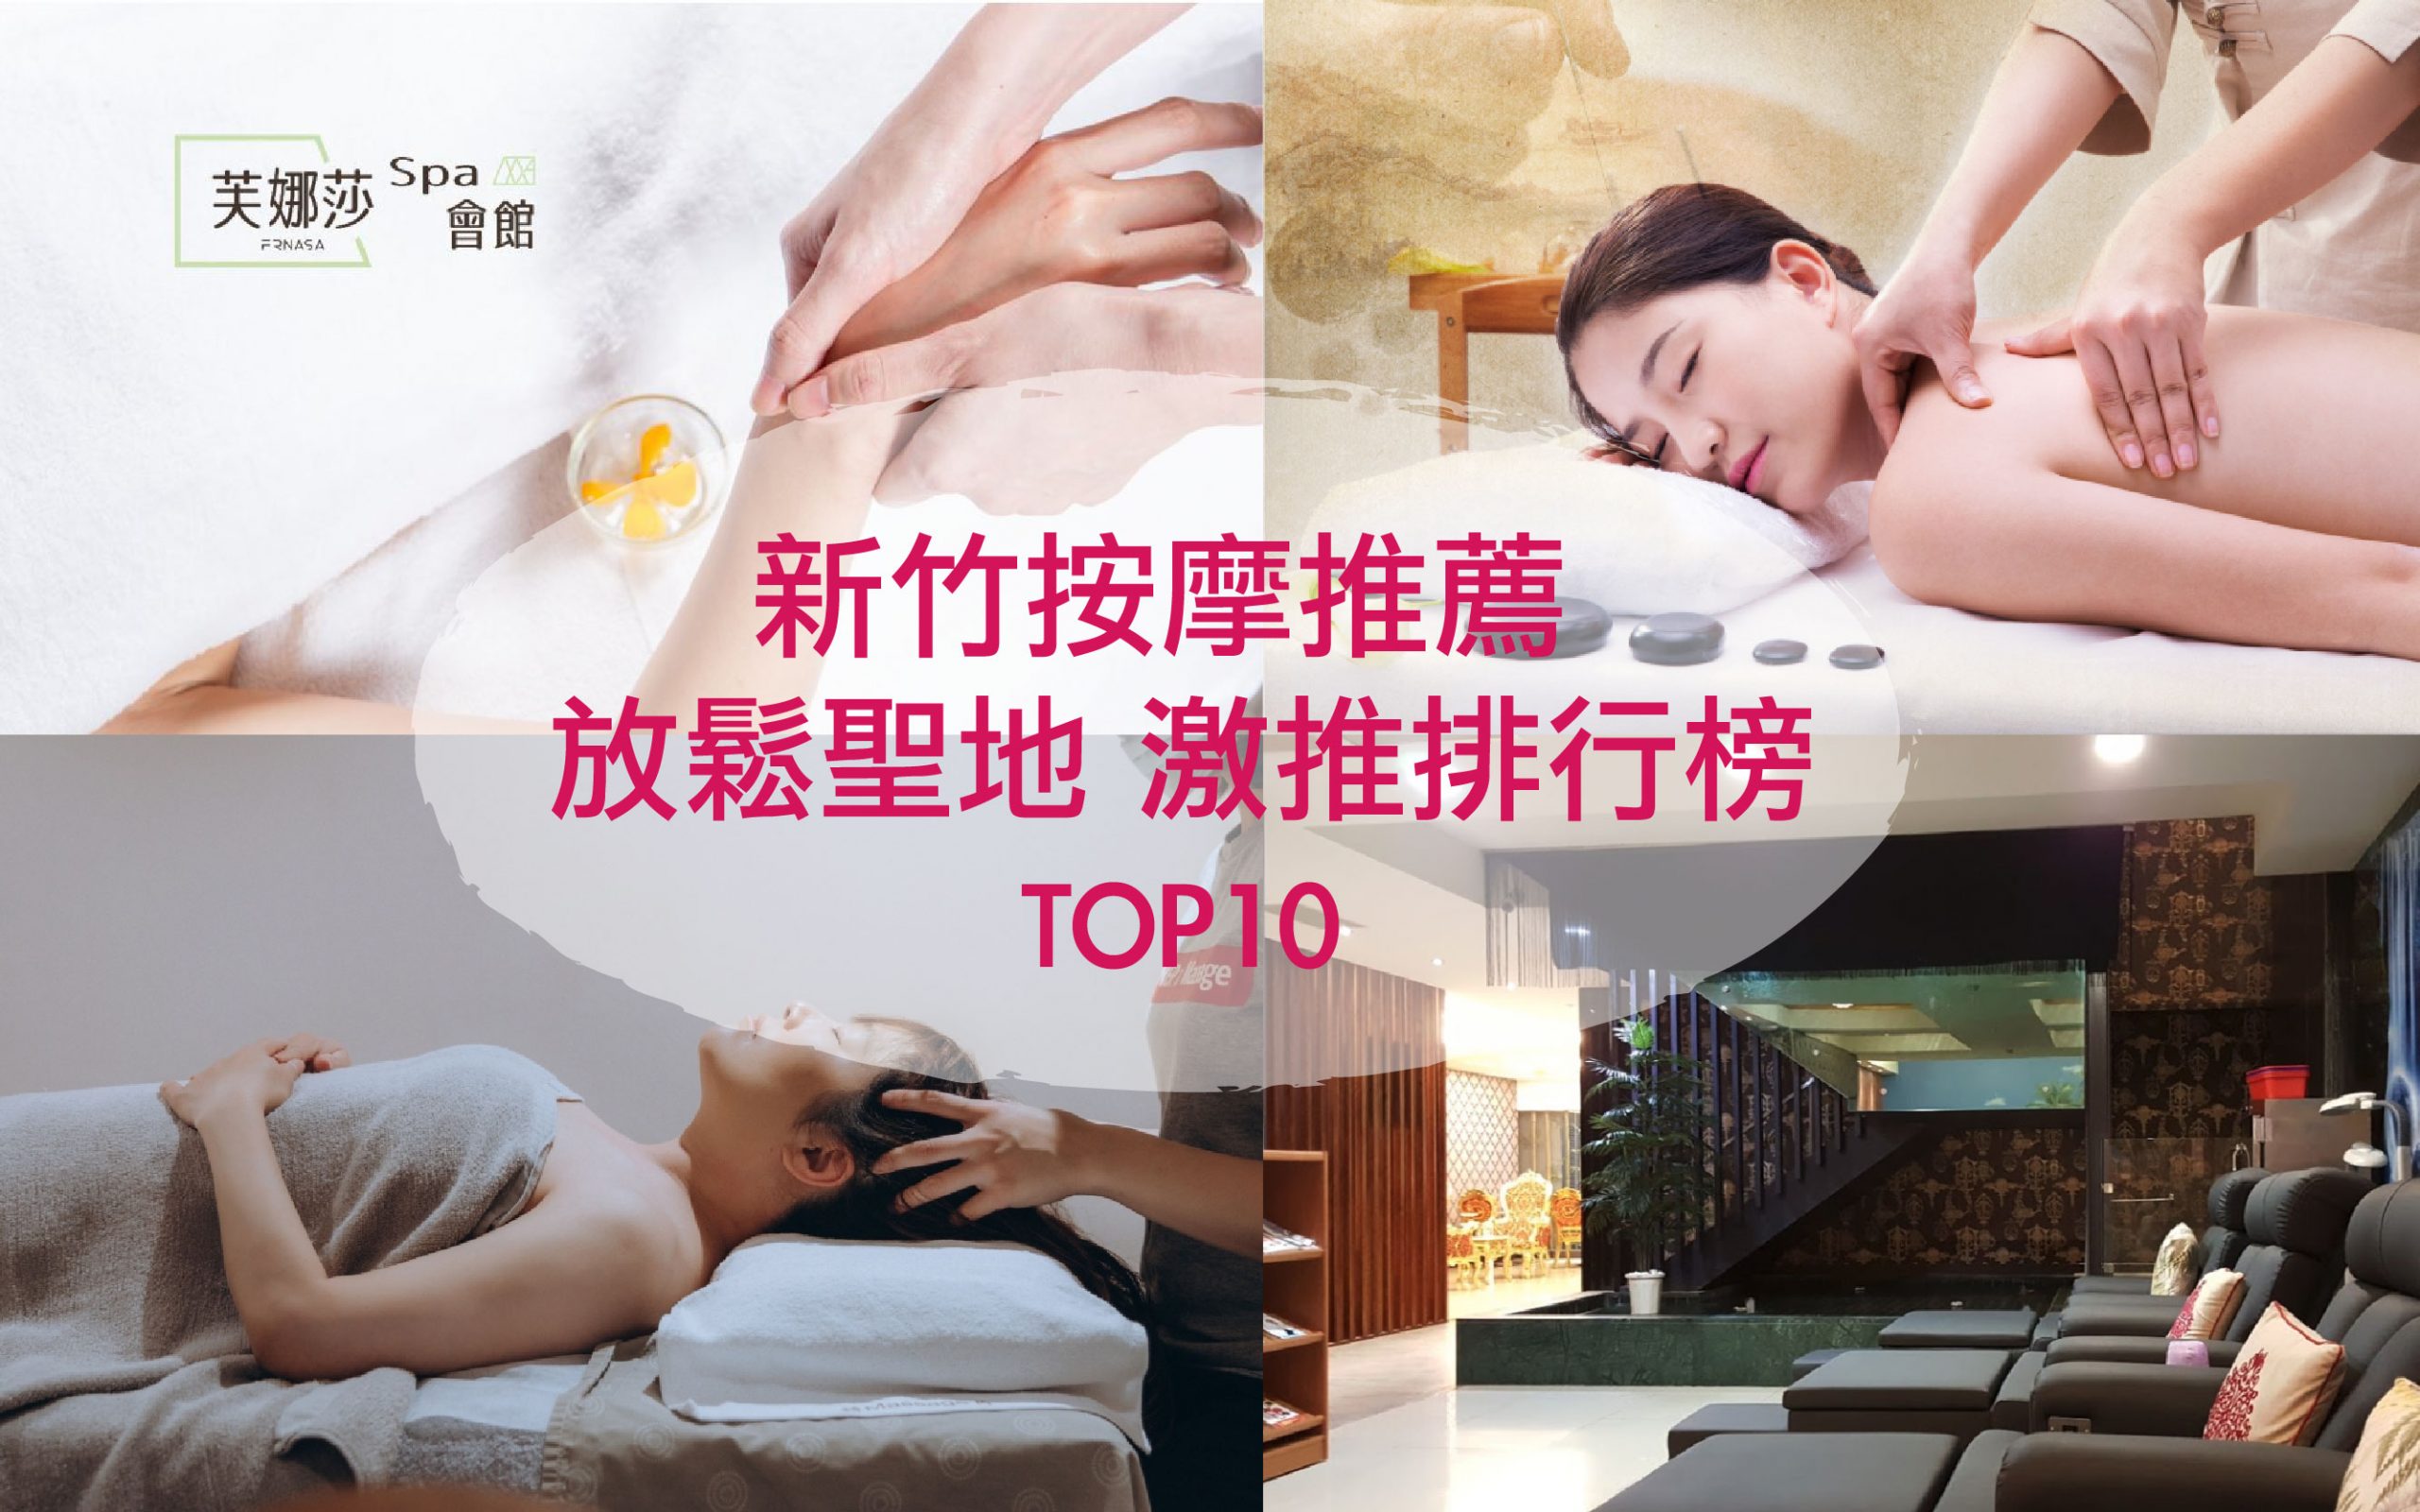 taichung massage 1 @東南亞投資報告